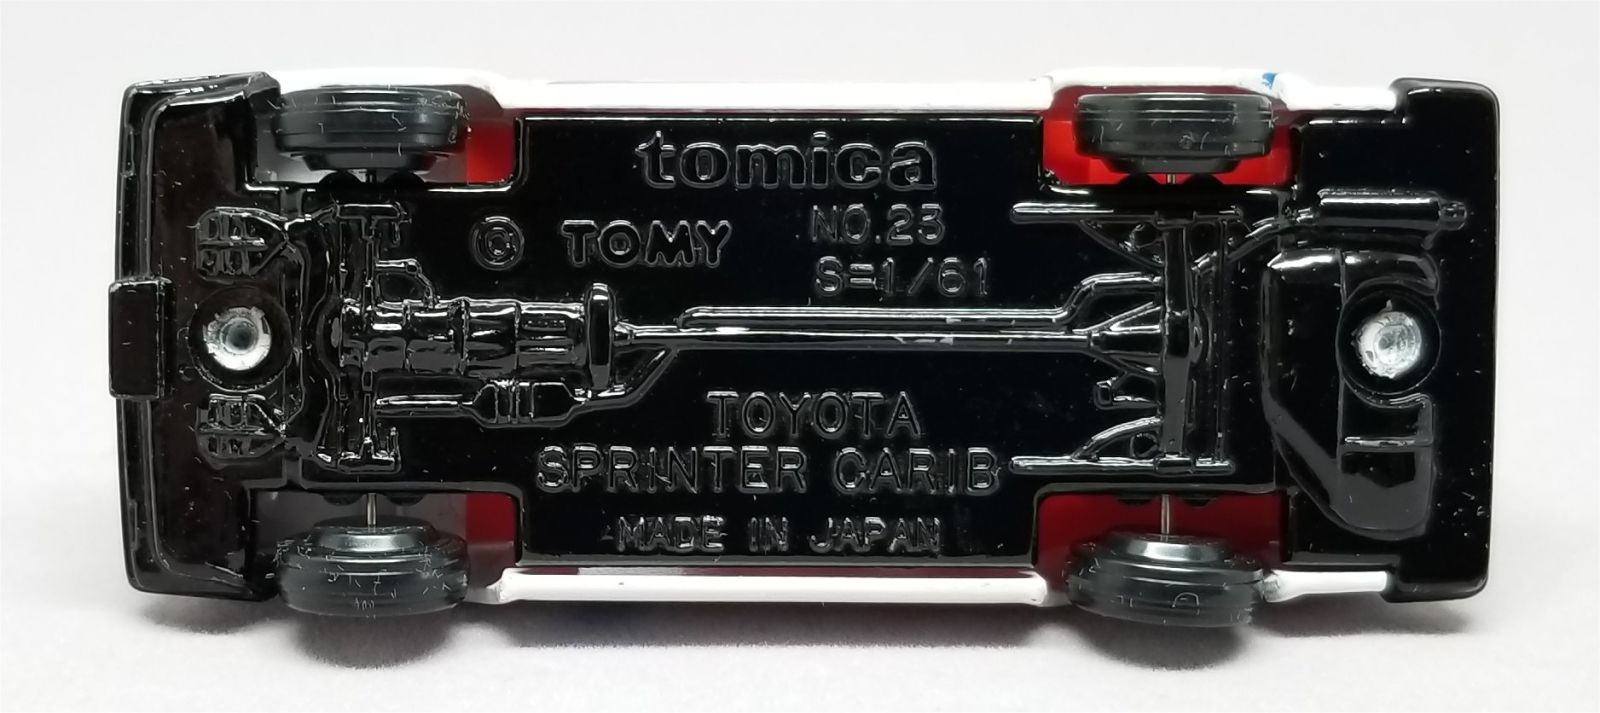 Illustration for article titled Radcast 2018: Tomica Toyota Sprinter Carib